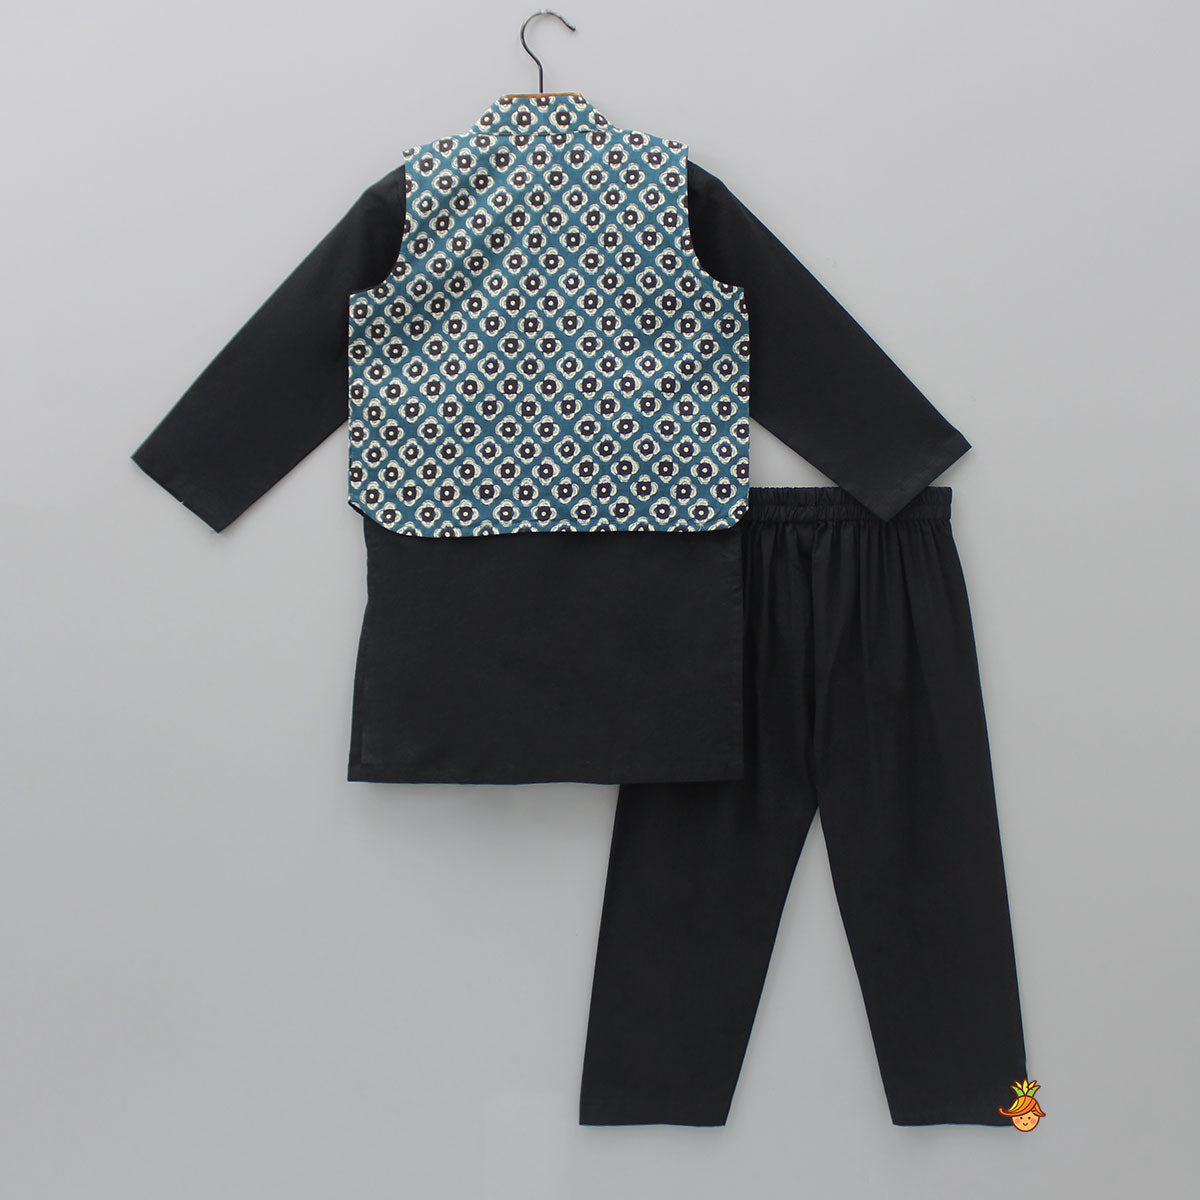 Pockets Detail Black Kurta With Printed Jacket And Pyjama